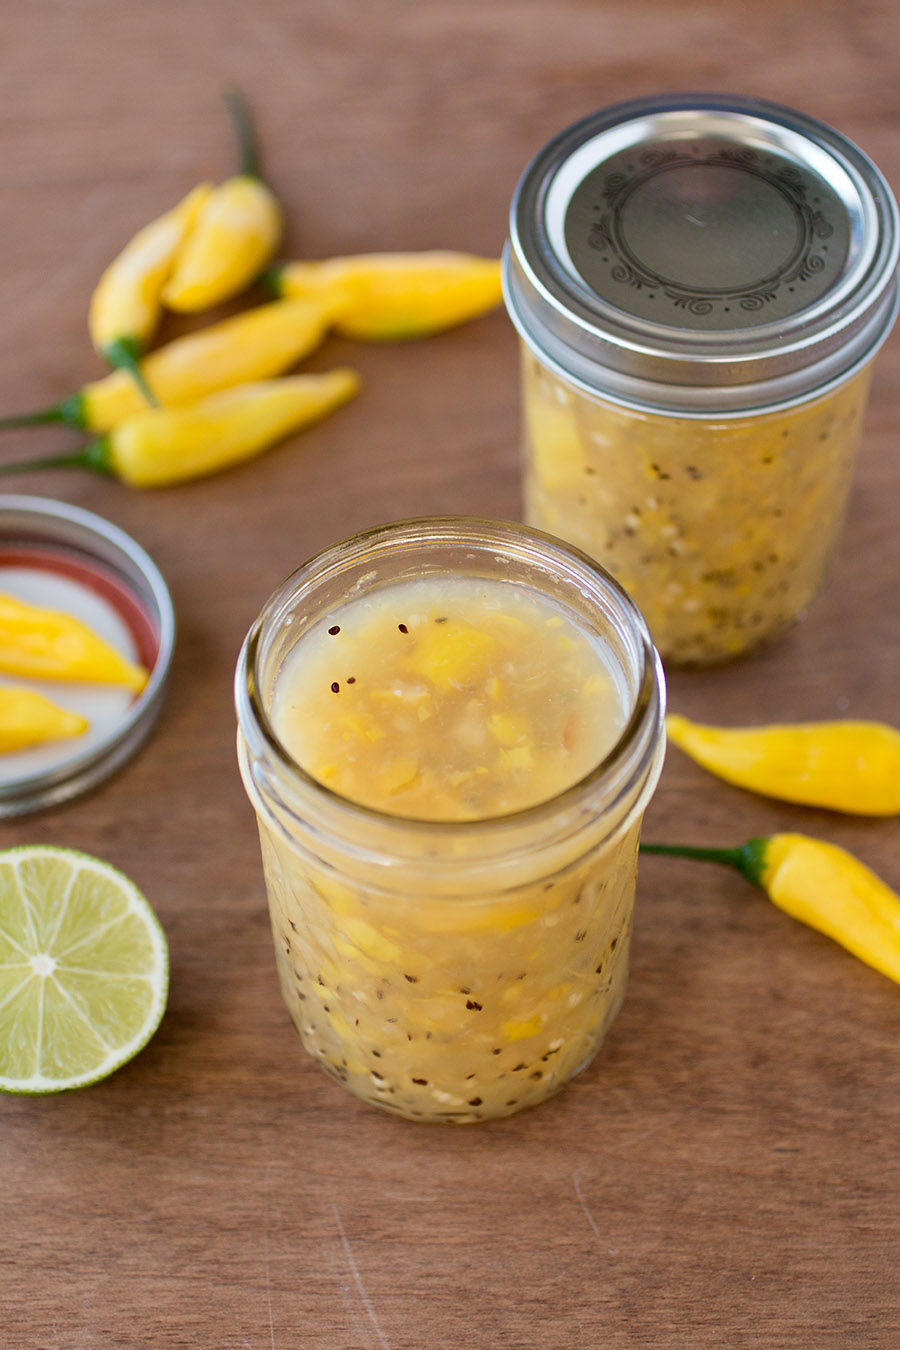 Sweet Pepper Jam Recipe (Sugar Free) in jars.